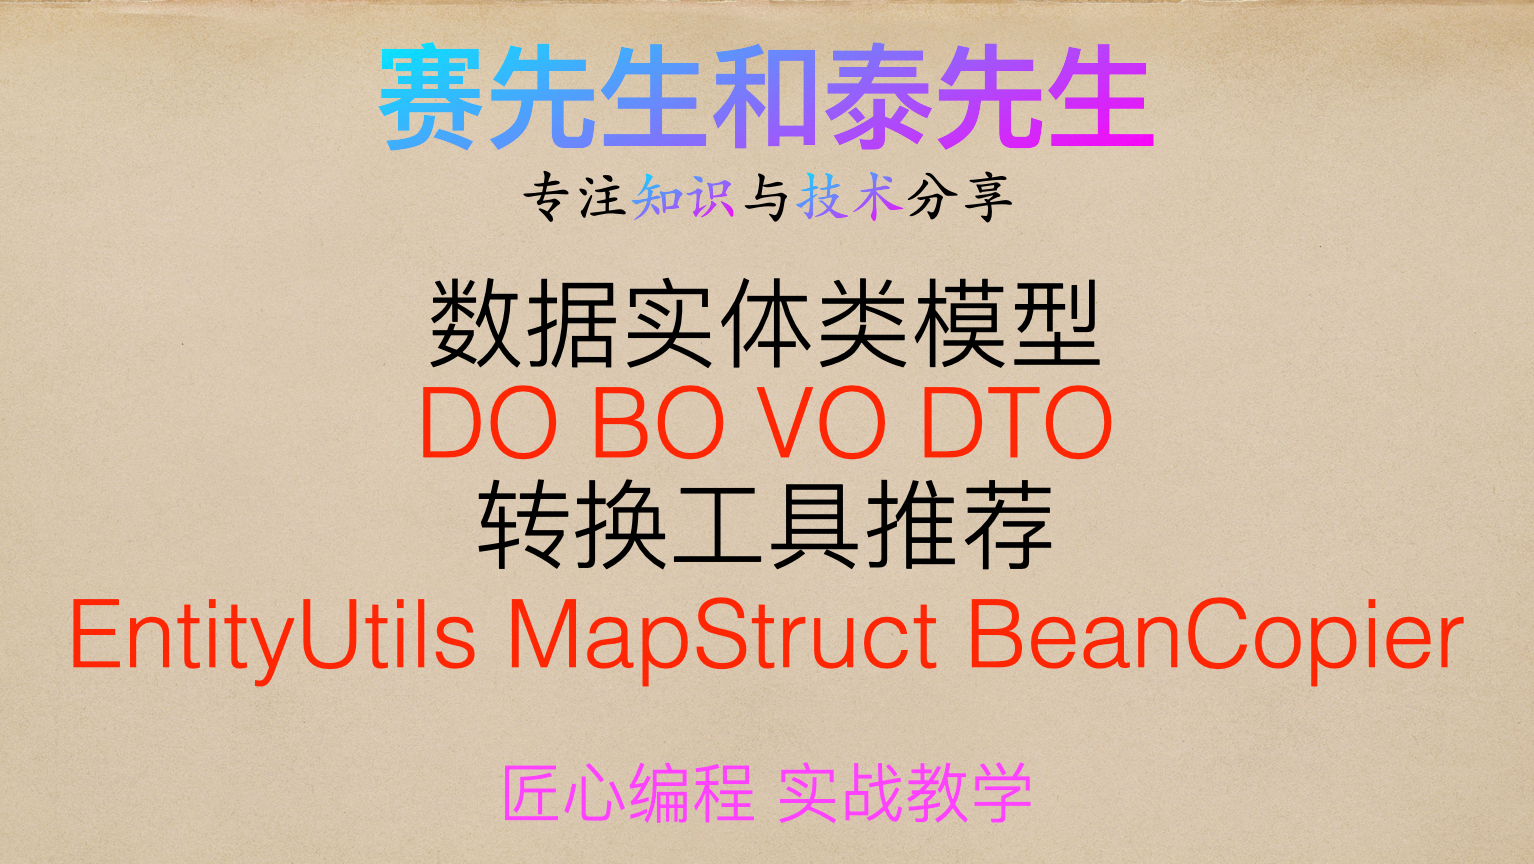 EntityUtils MapStruct BeanCopier 数据实体类转换工具 DO BO VO DTO 附视频